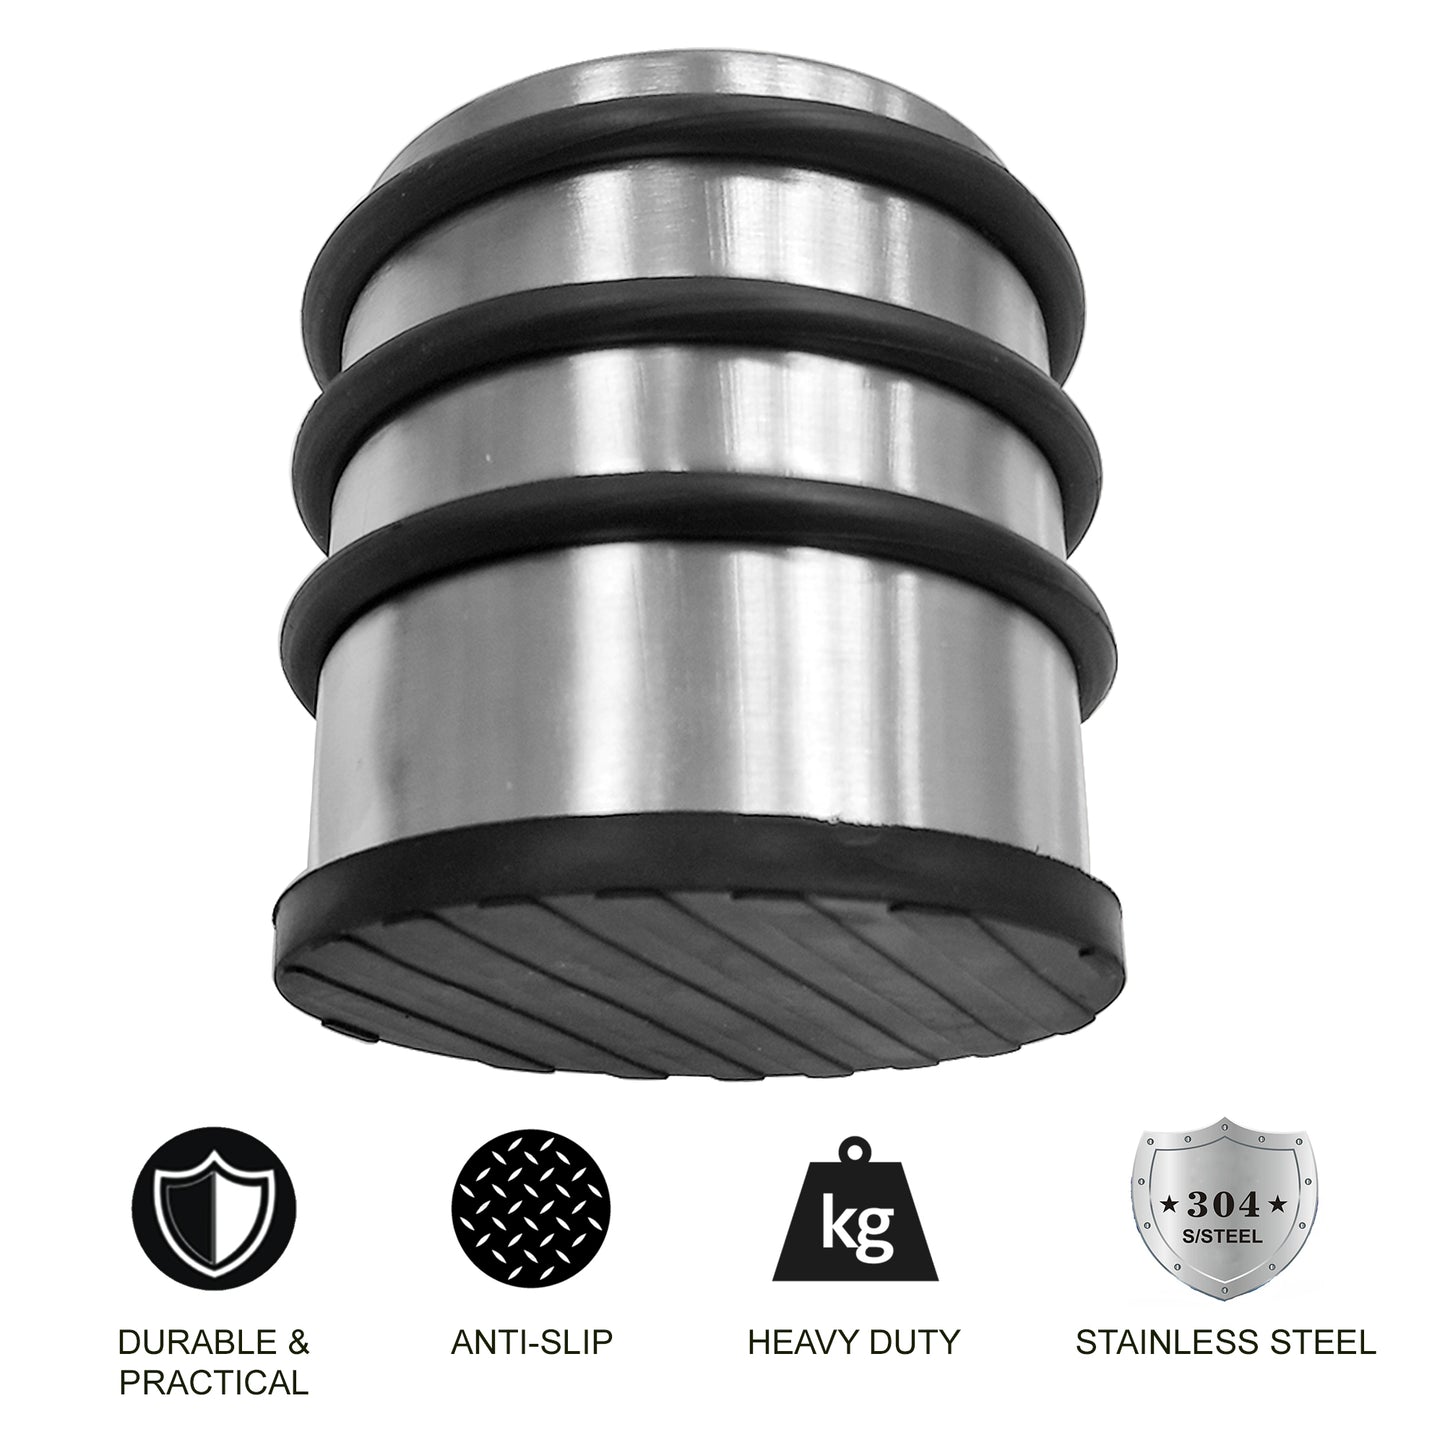 PALMAT Heavy Duty vloerdeurstopper 1,1 kg roestvrij staal met antislip rubberen beschermer krasvrij